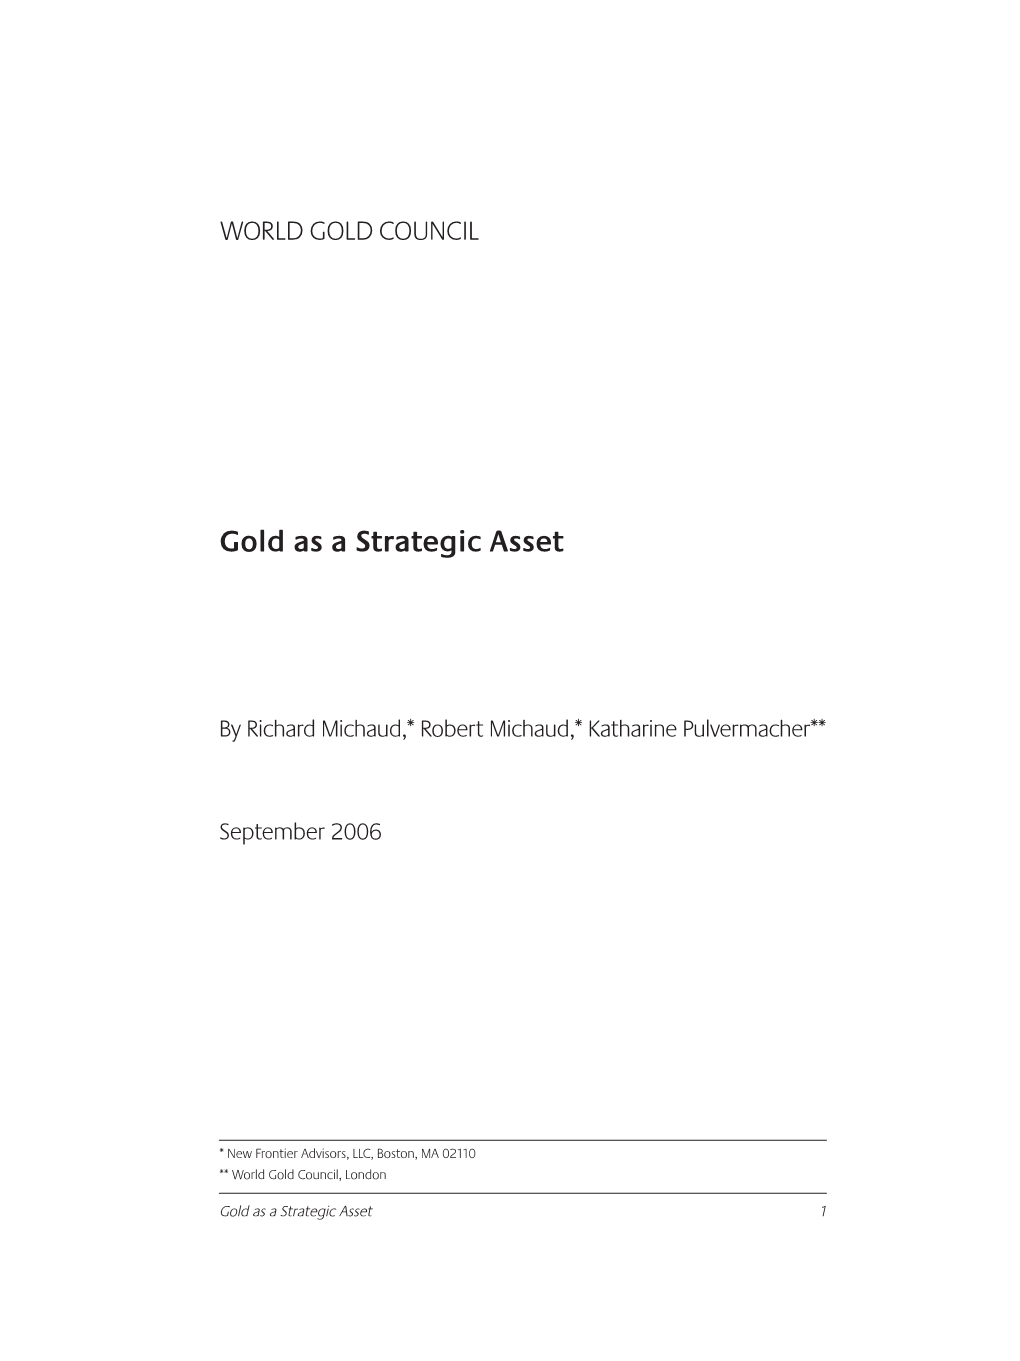 Gold As a Strategic Asset